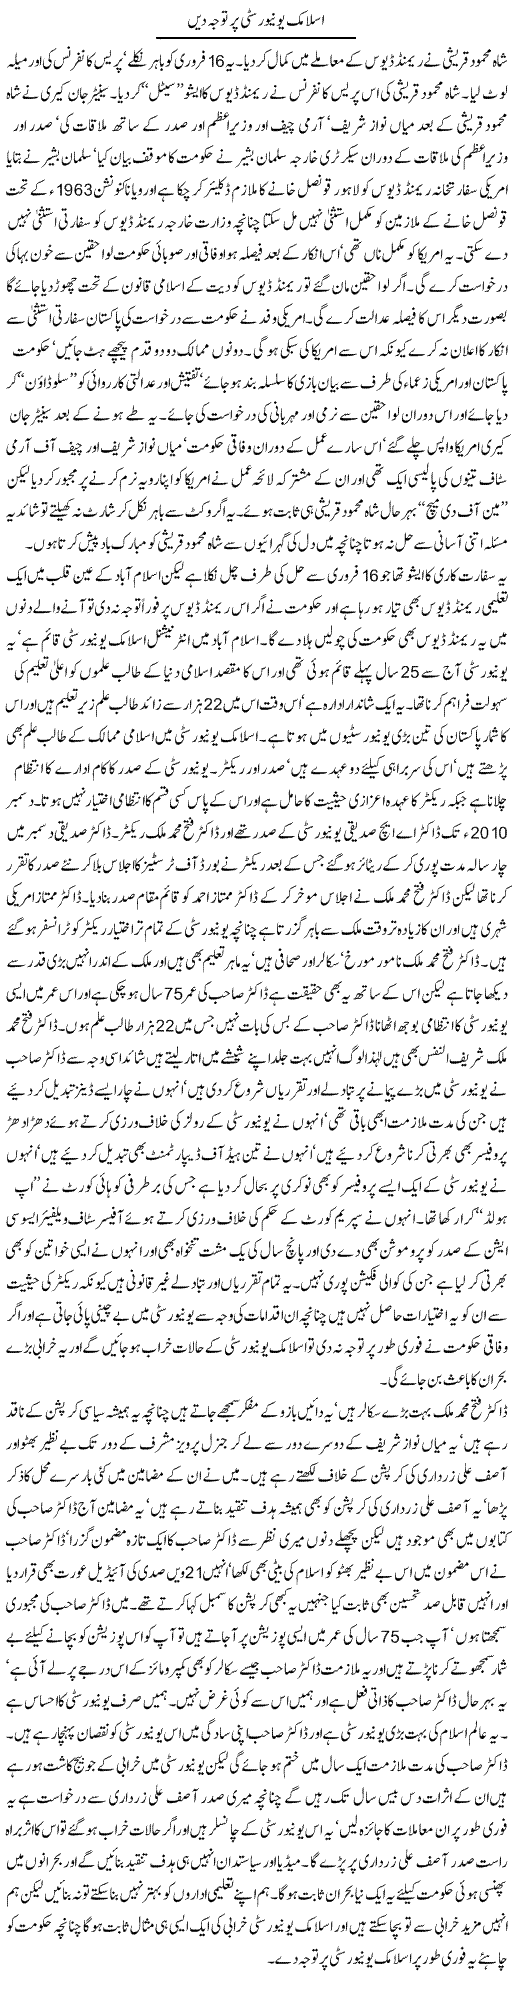 Islamic University Express Column Javed Chaudhry 18 February 2011